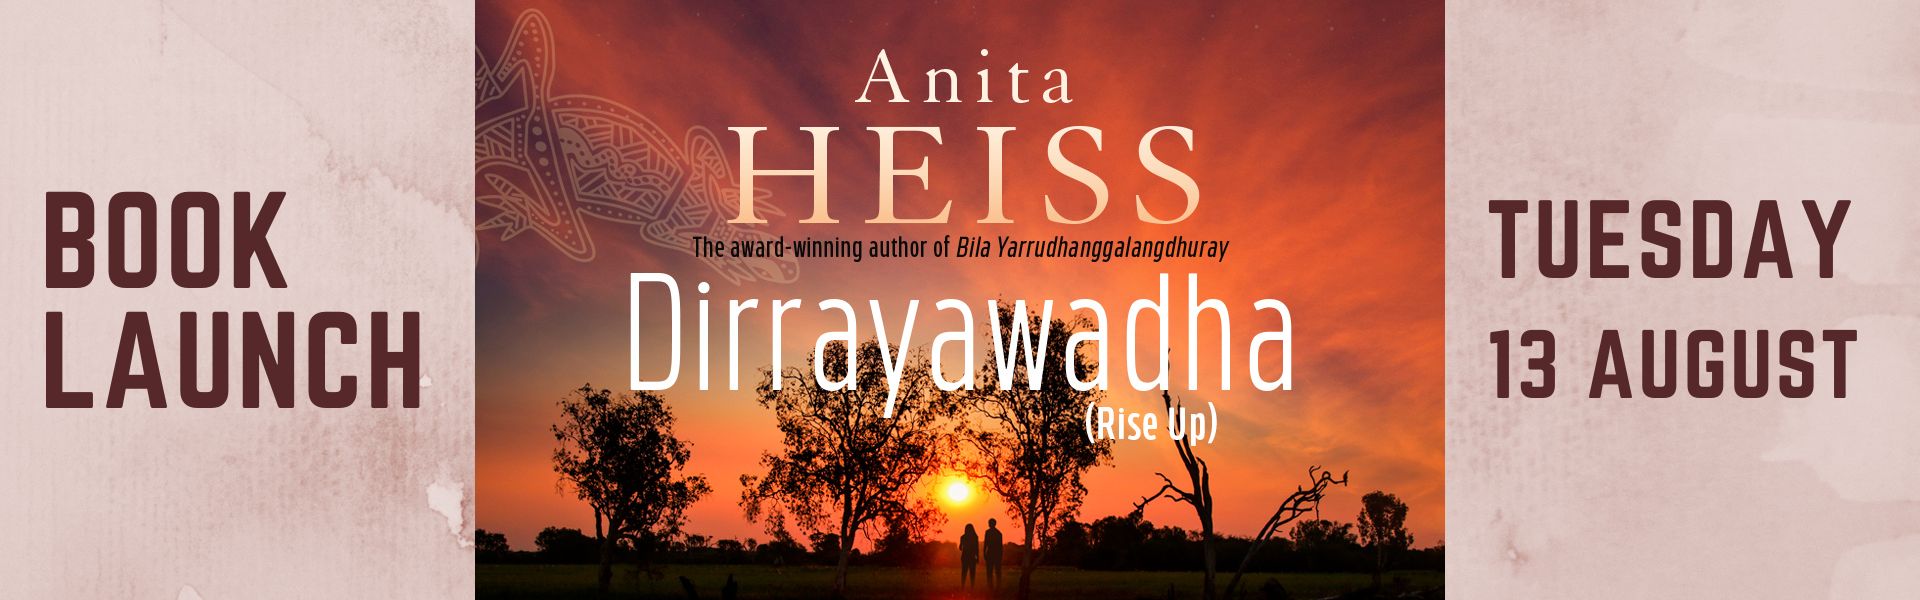 Anita Heiss book launch